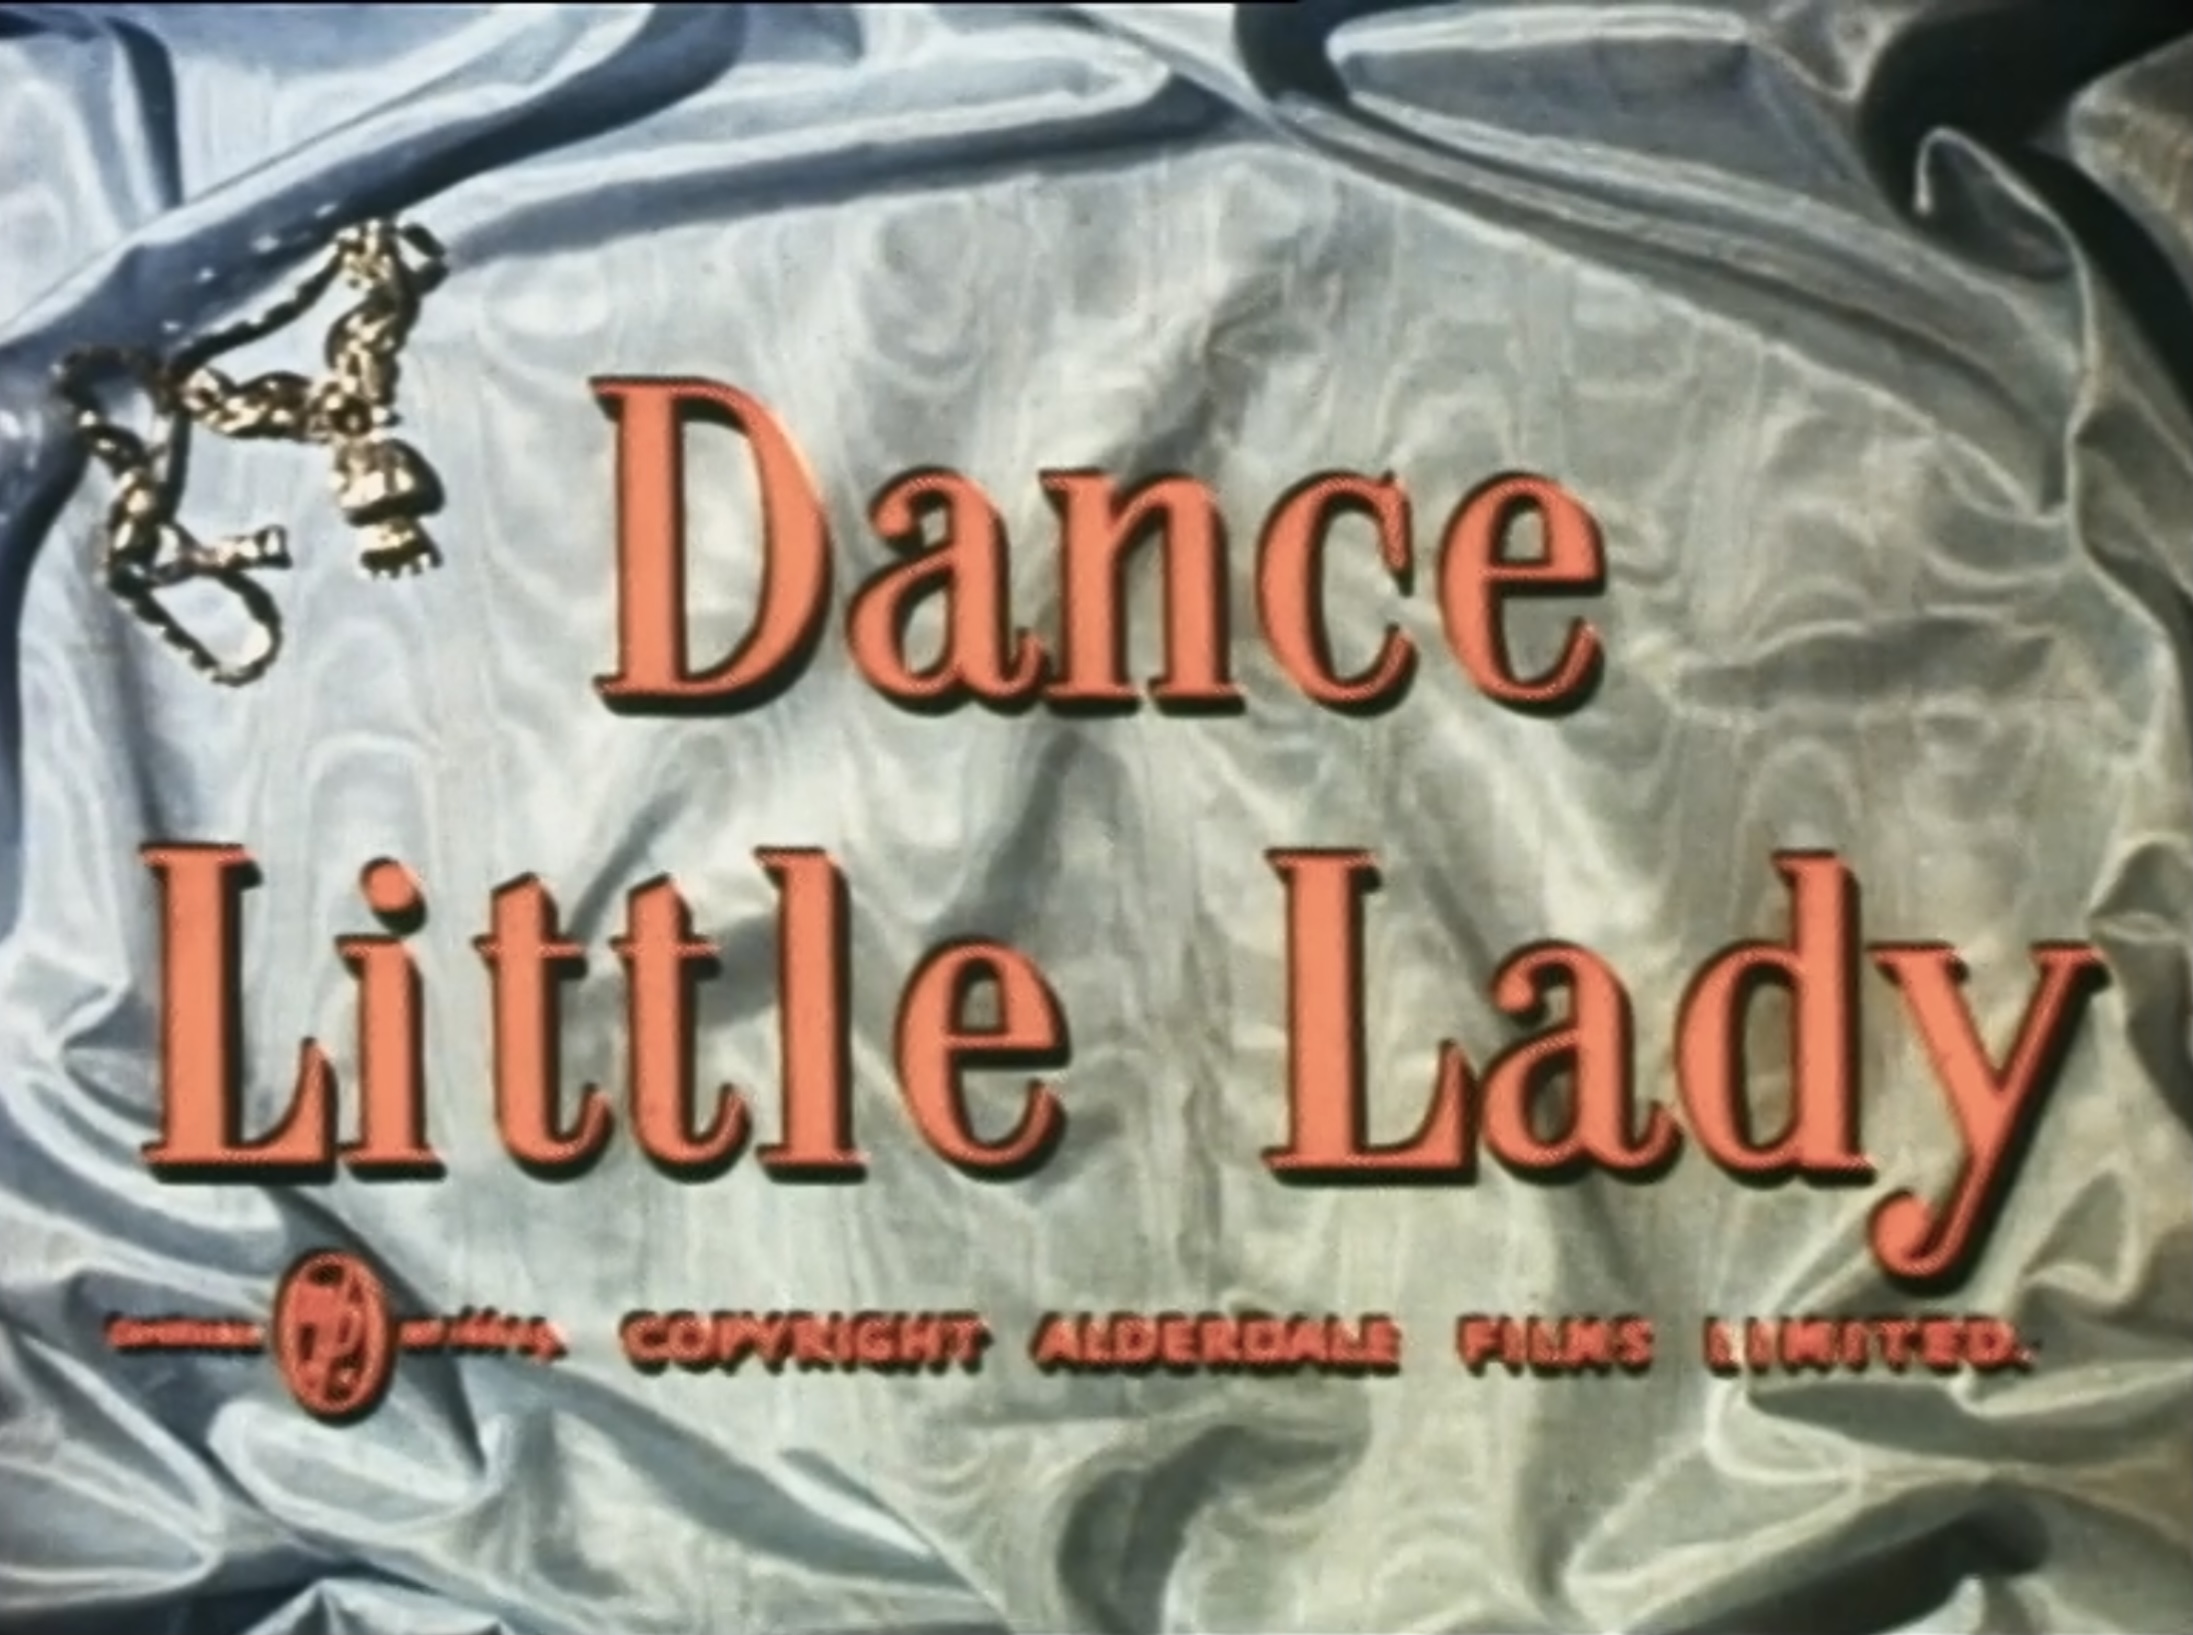 Dance Little Lady (1954) Screenshot 1